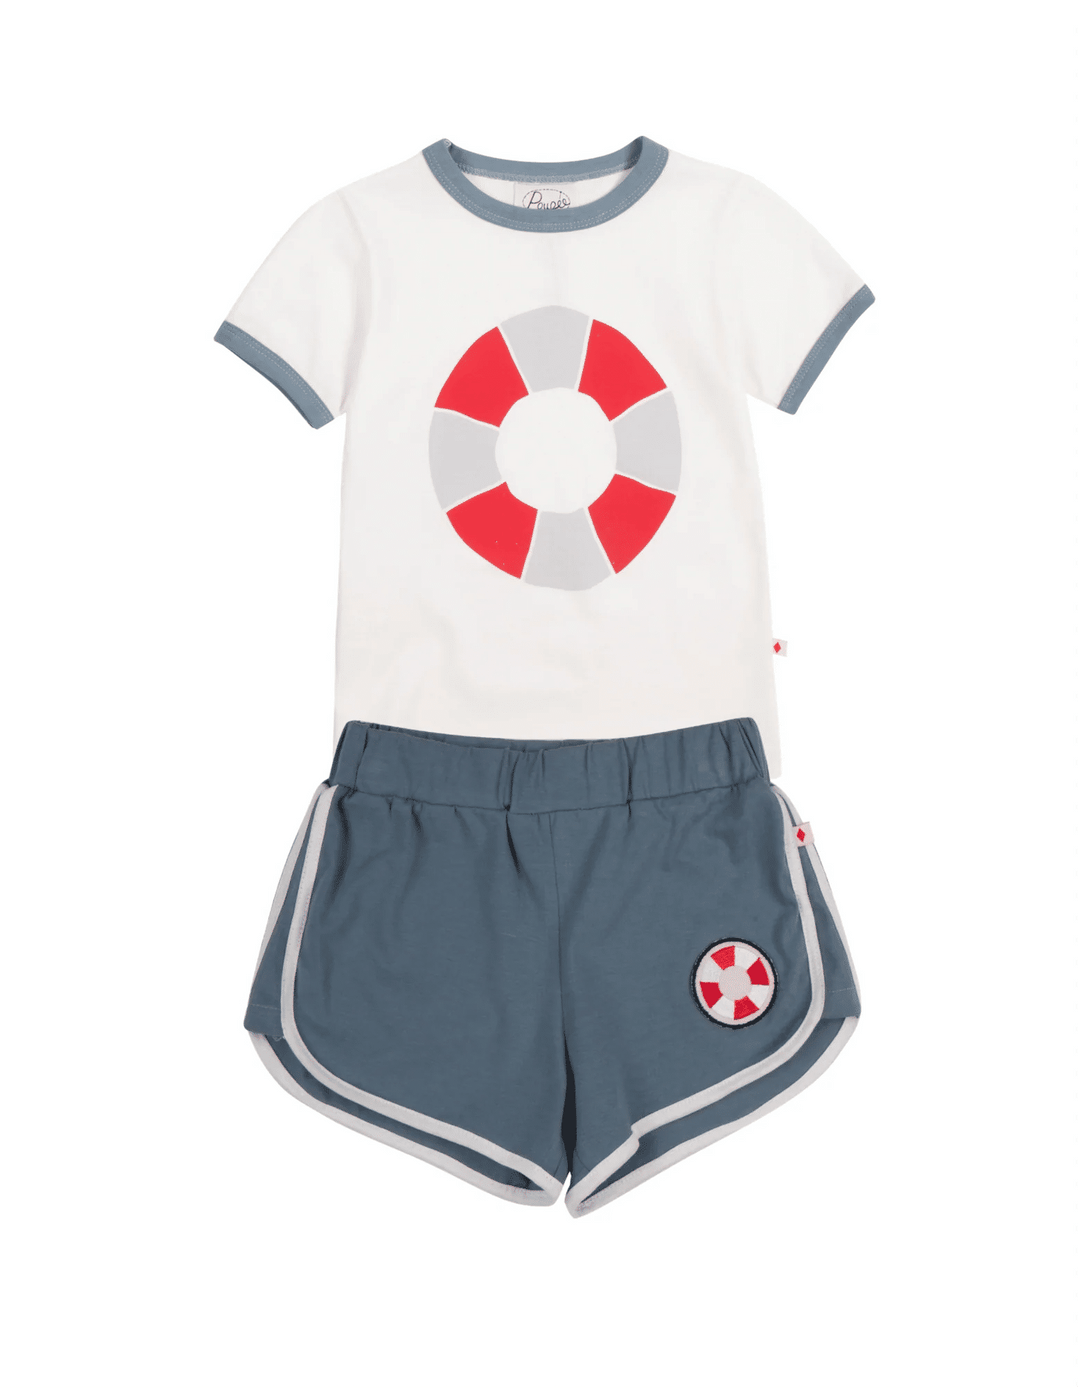 Lifesaver T-shirt and Short Set